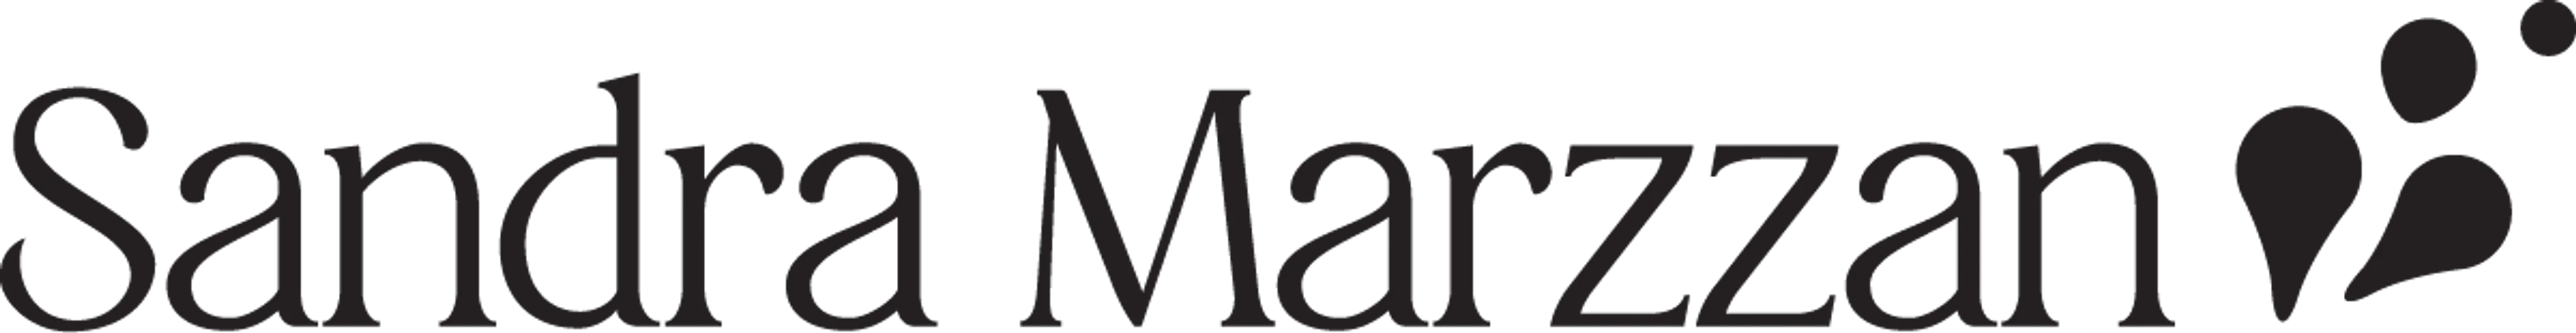 SANDRA MARZZAN logo